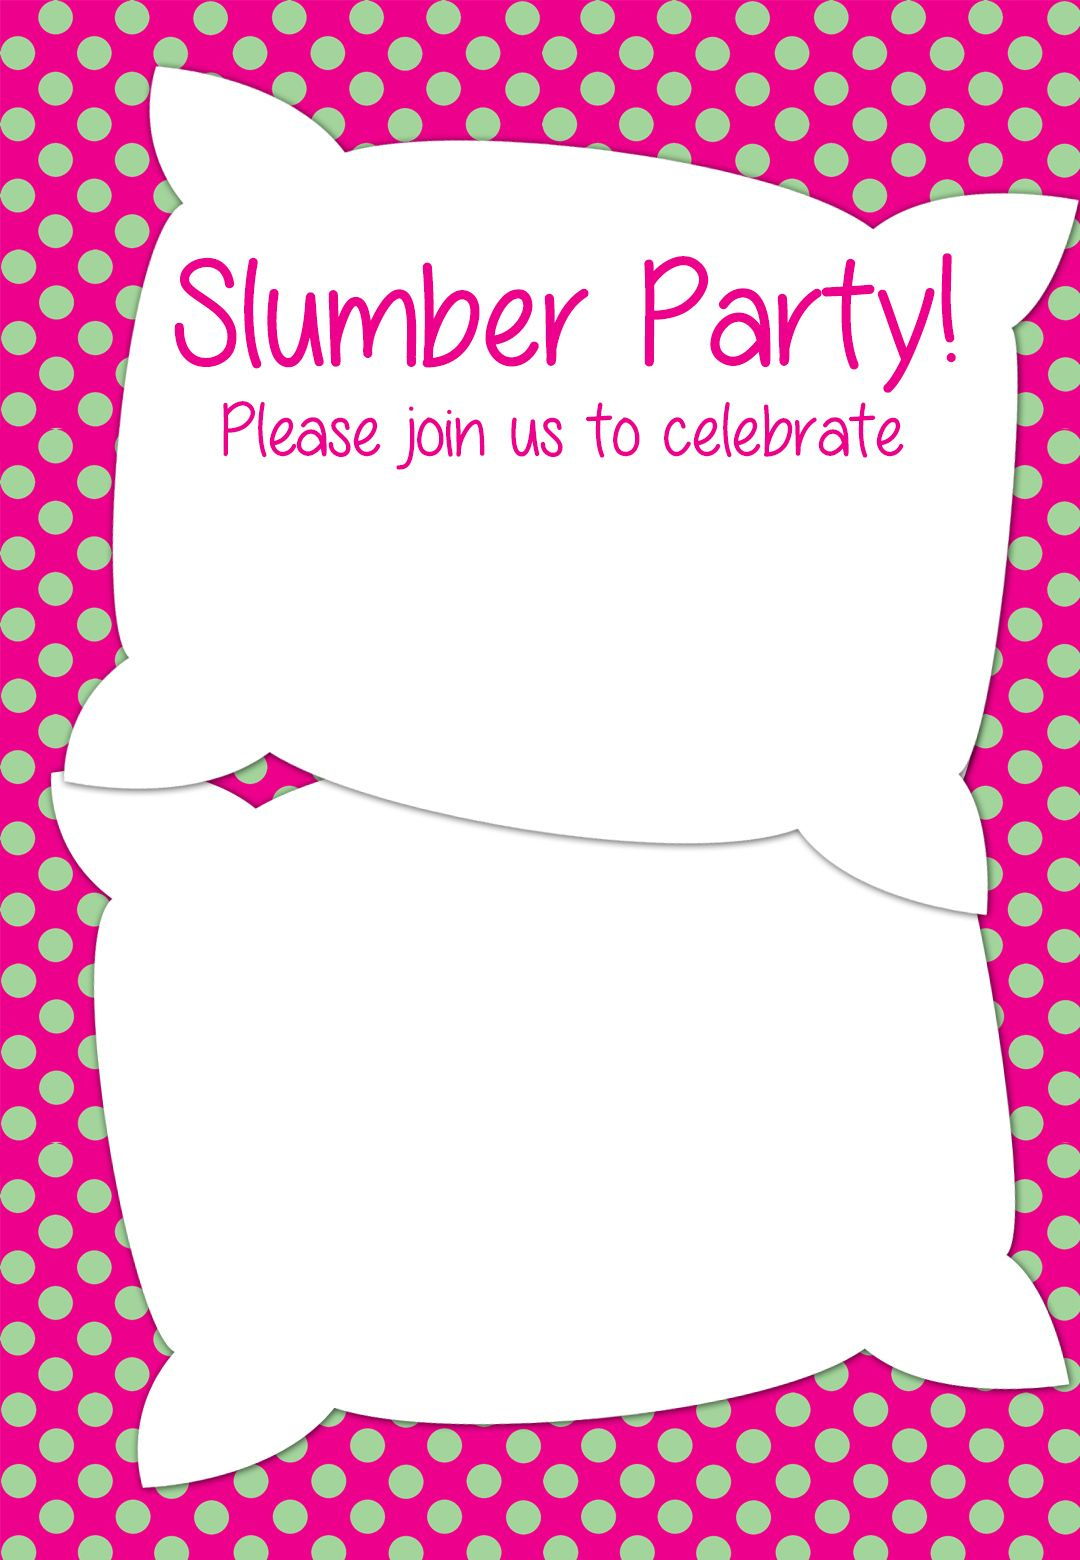 Free Printable Slumber Party Invitation | Party Ideas In 2019 - Free Printable Event Invitations